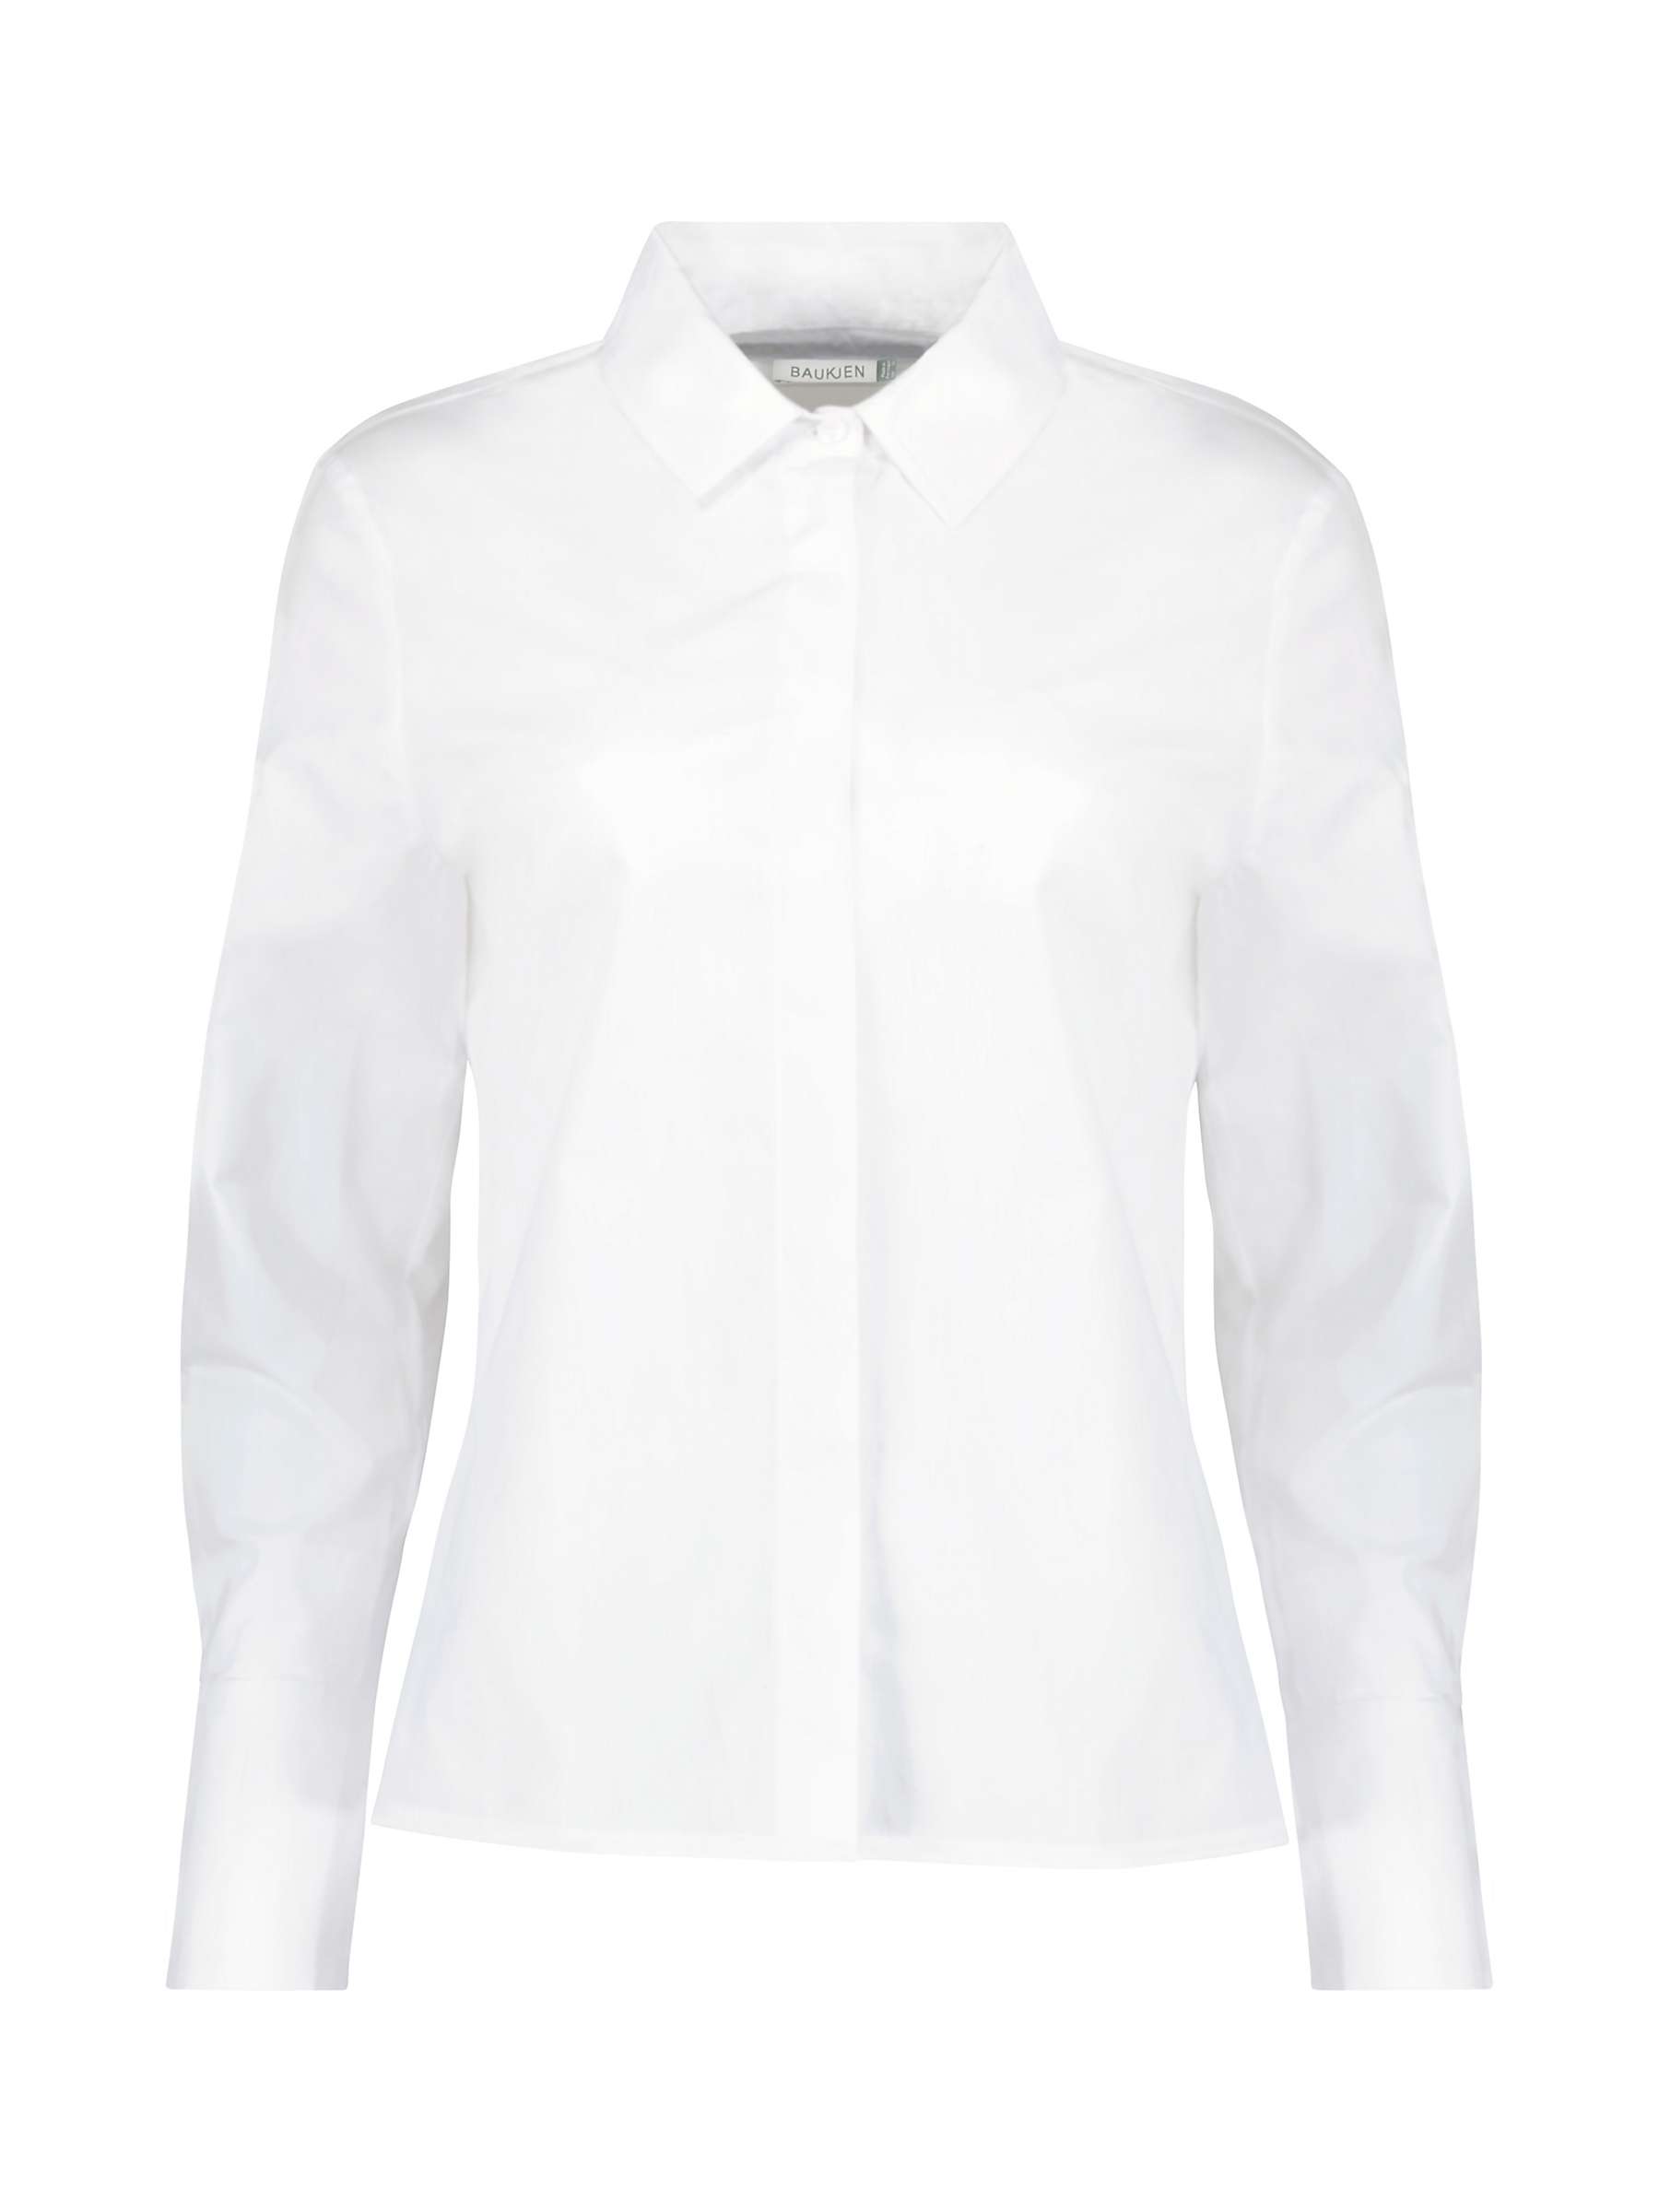 Buy Baukjen Tinsley Plain Organic Cotton Classic Shirt Online at johnlewis.com